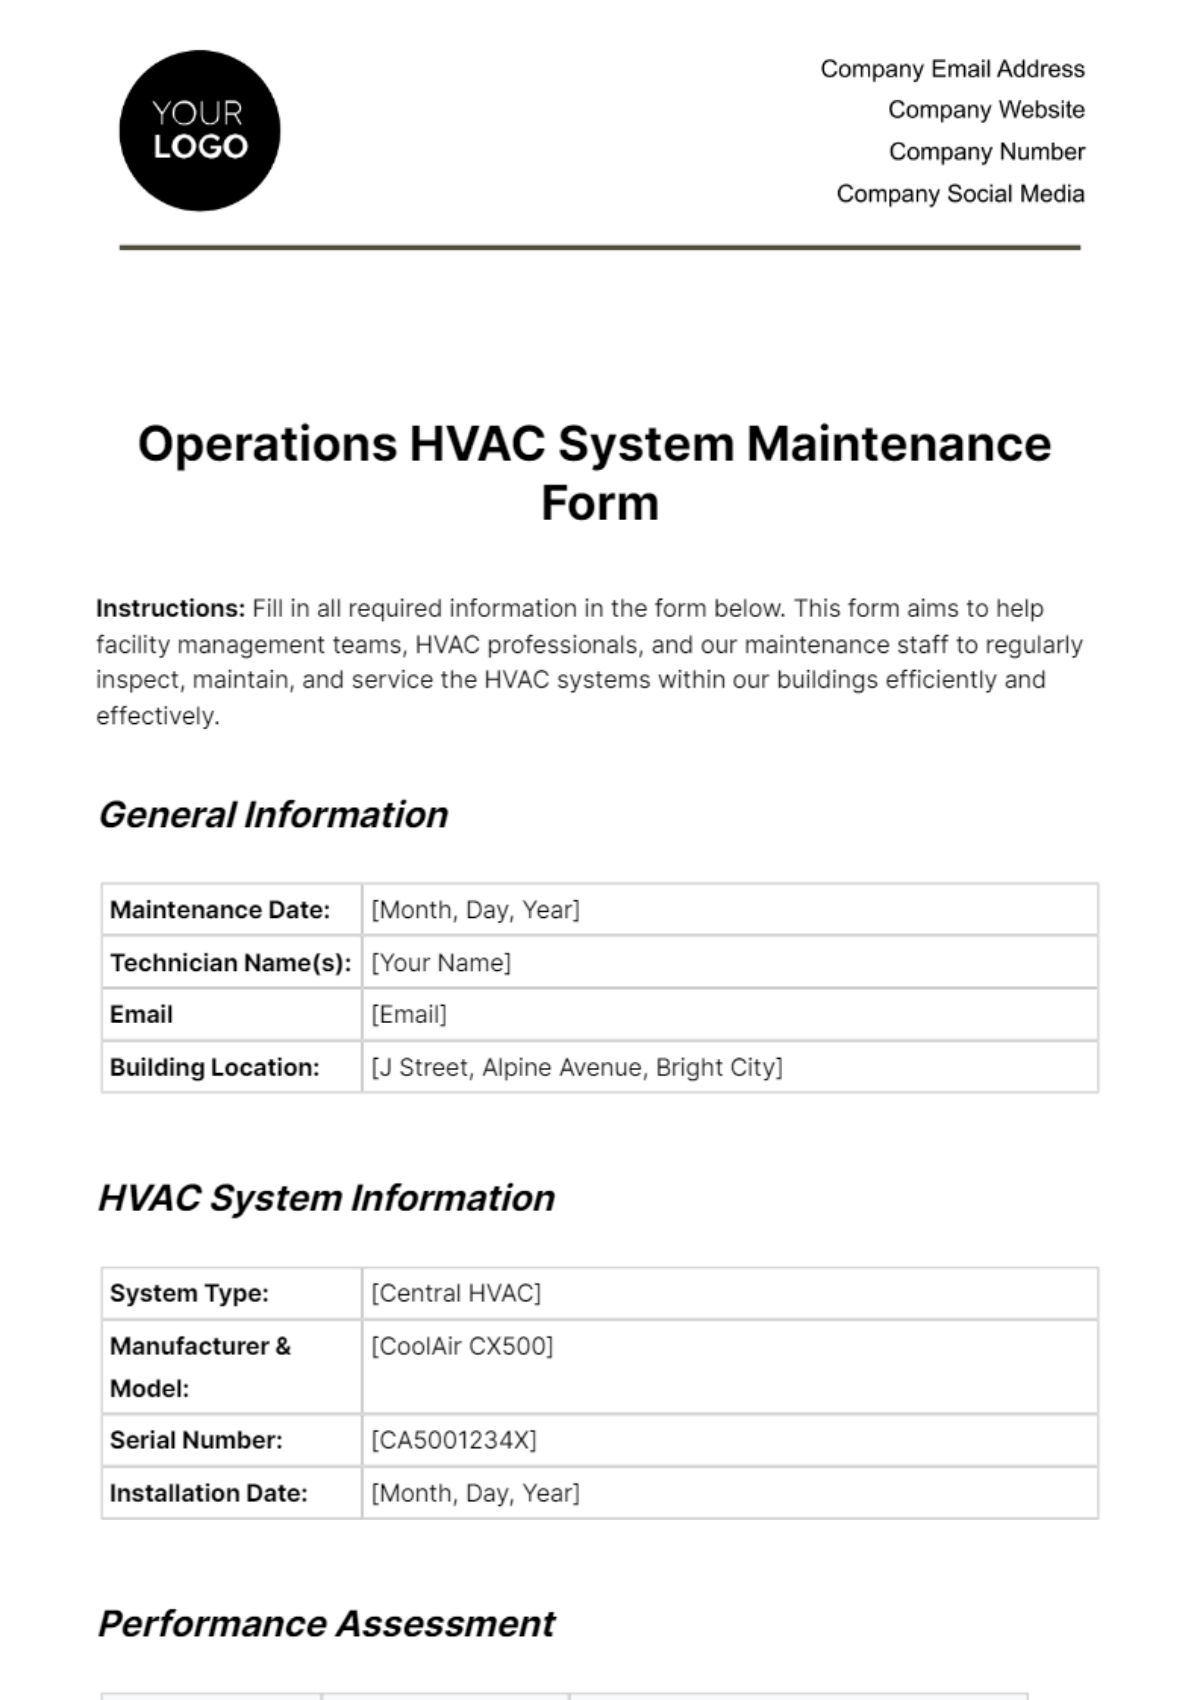 Operations HVAC System Maintenance Form Template